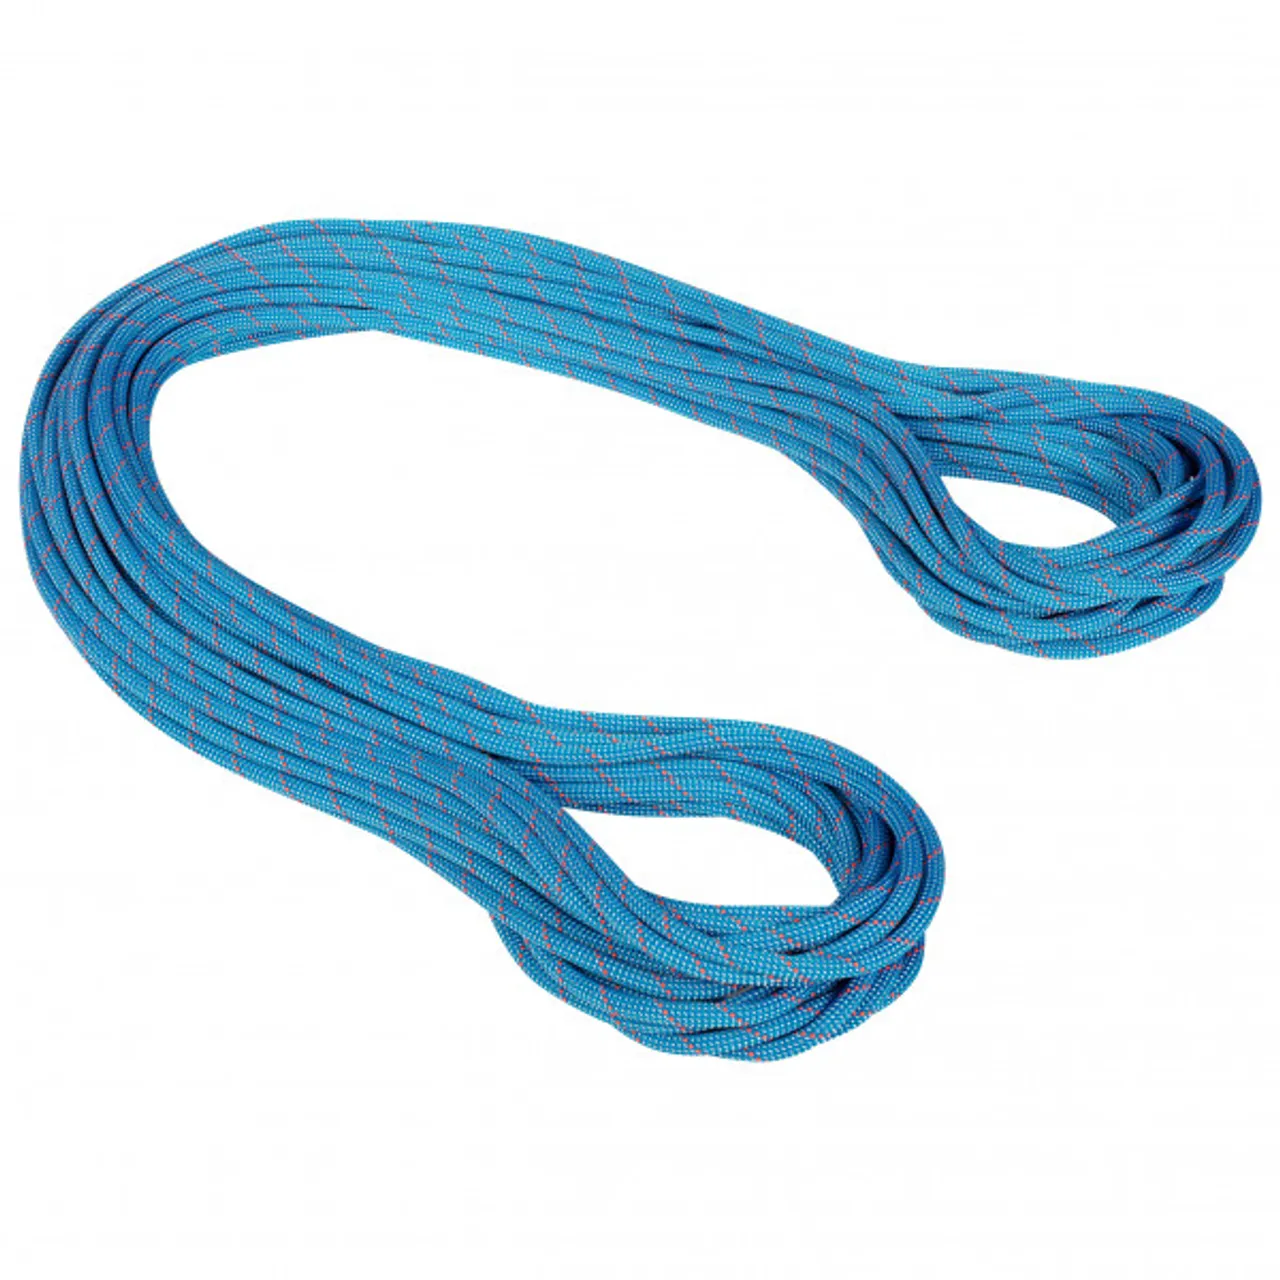 Mammut - 9.5 Crag Classic Rope - Single rope size 50 m, blue